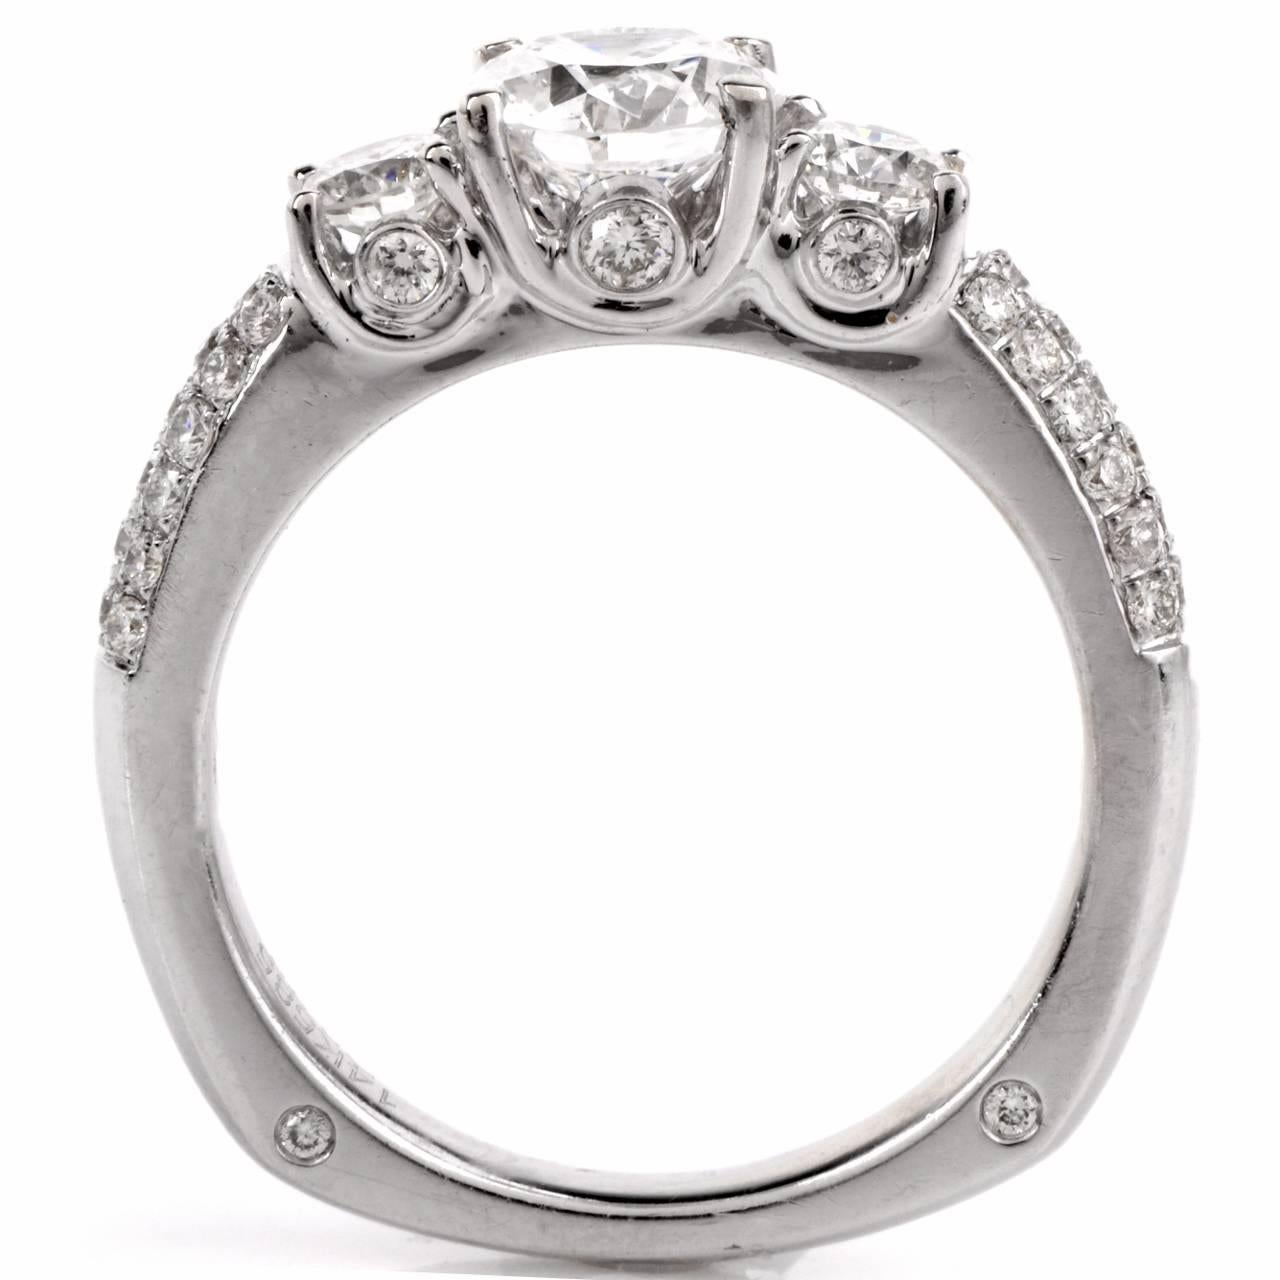 1.71 carat diamond ring